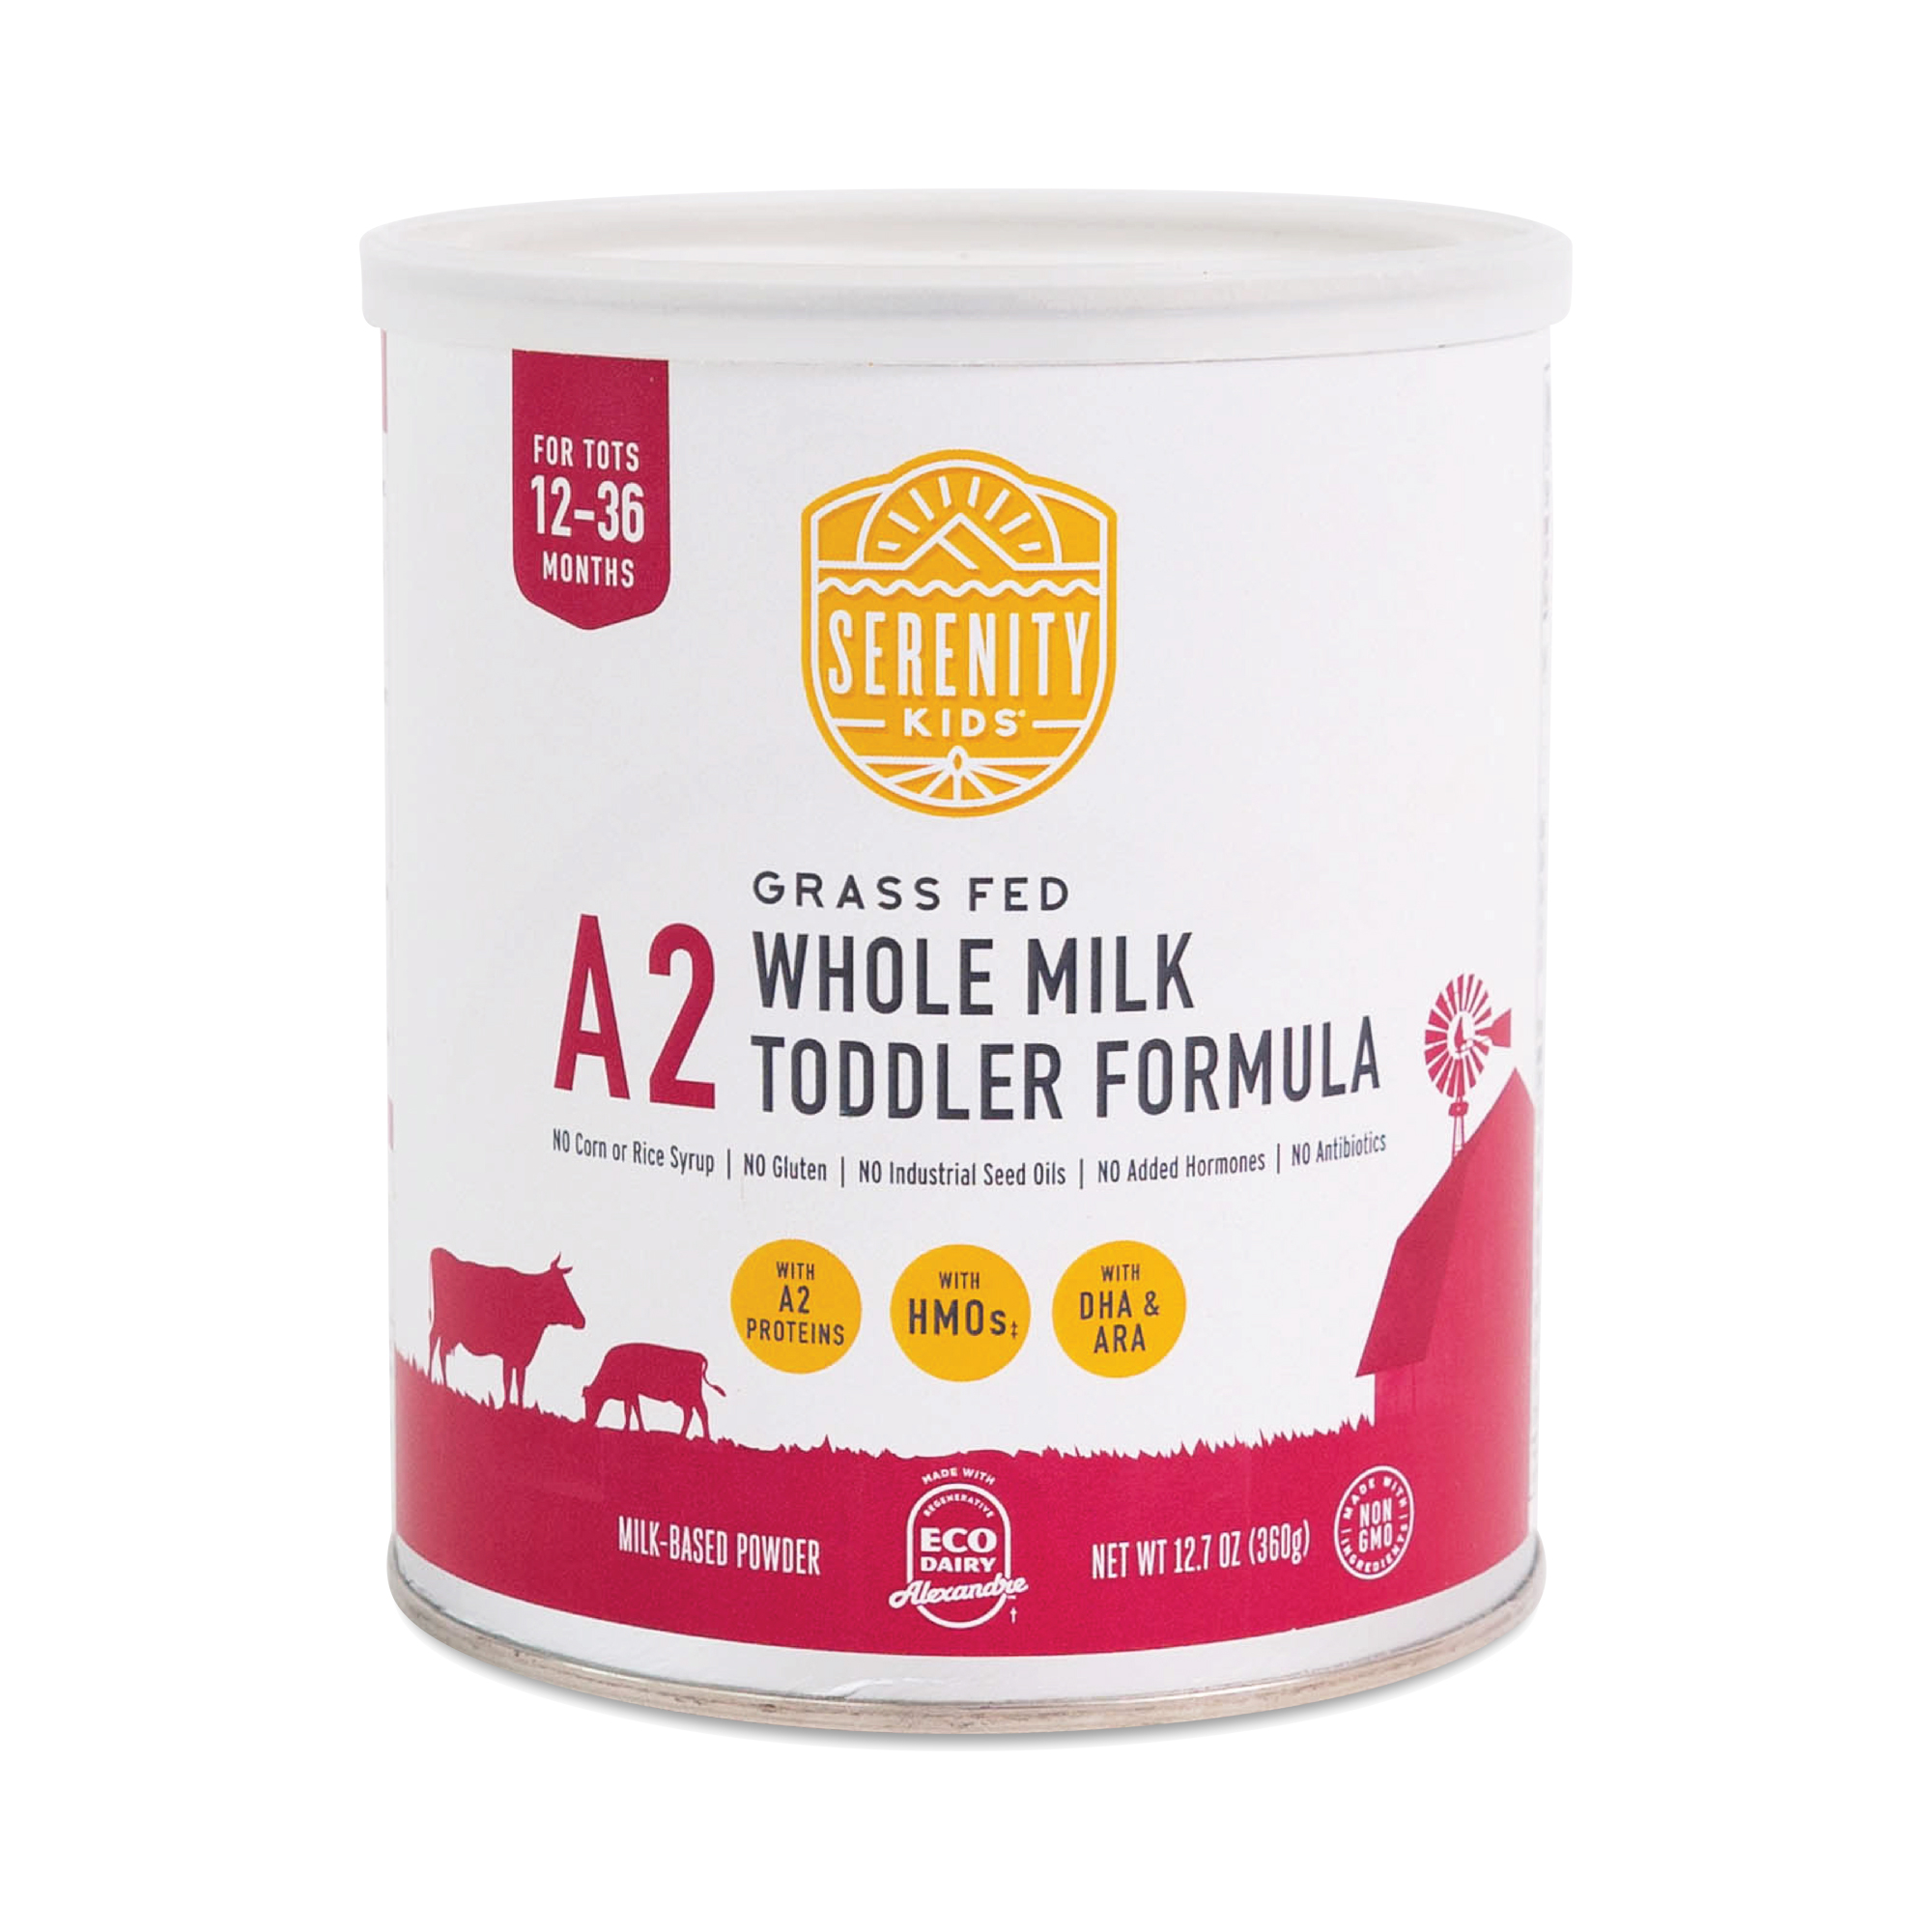 Serenity Kids Toddler Formula, Grass Fed A2 Whole Milk | Thrive Market